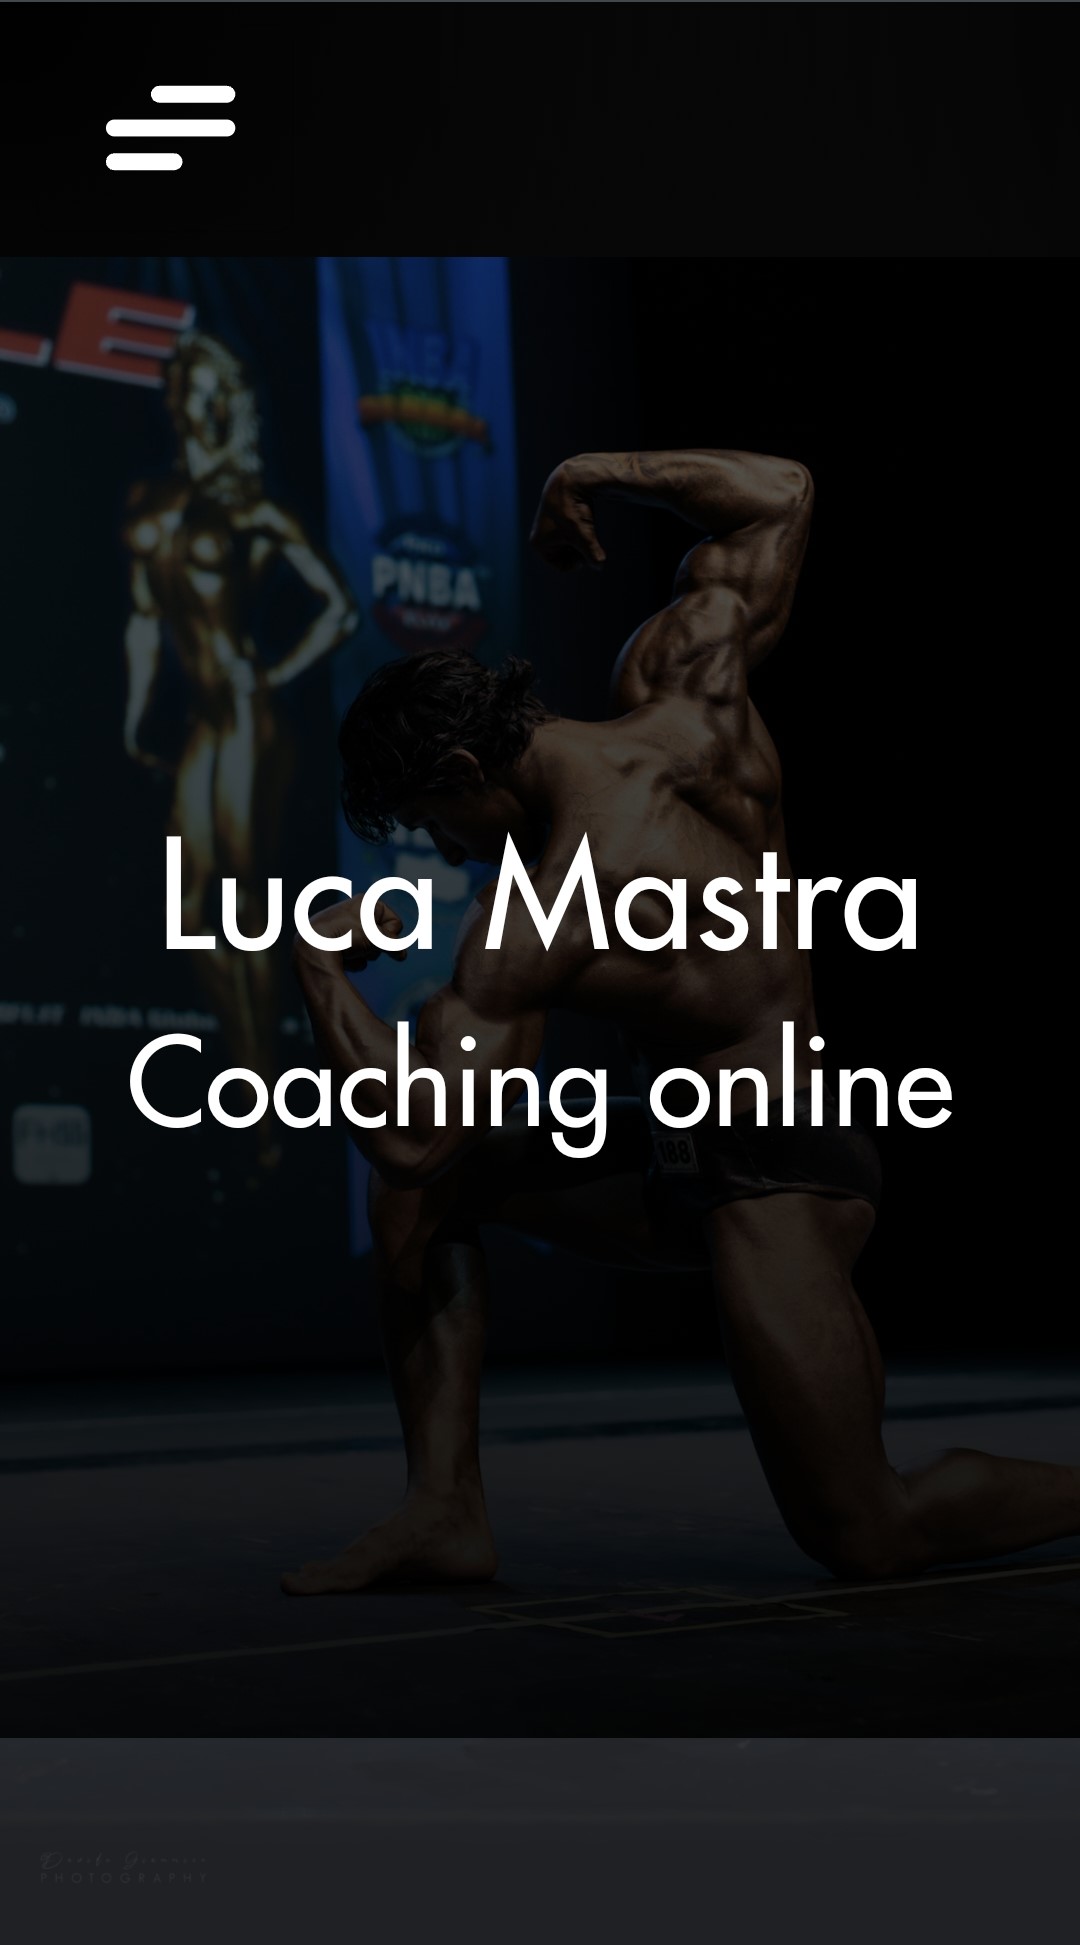 Image of Luca Mastra's website